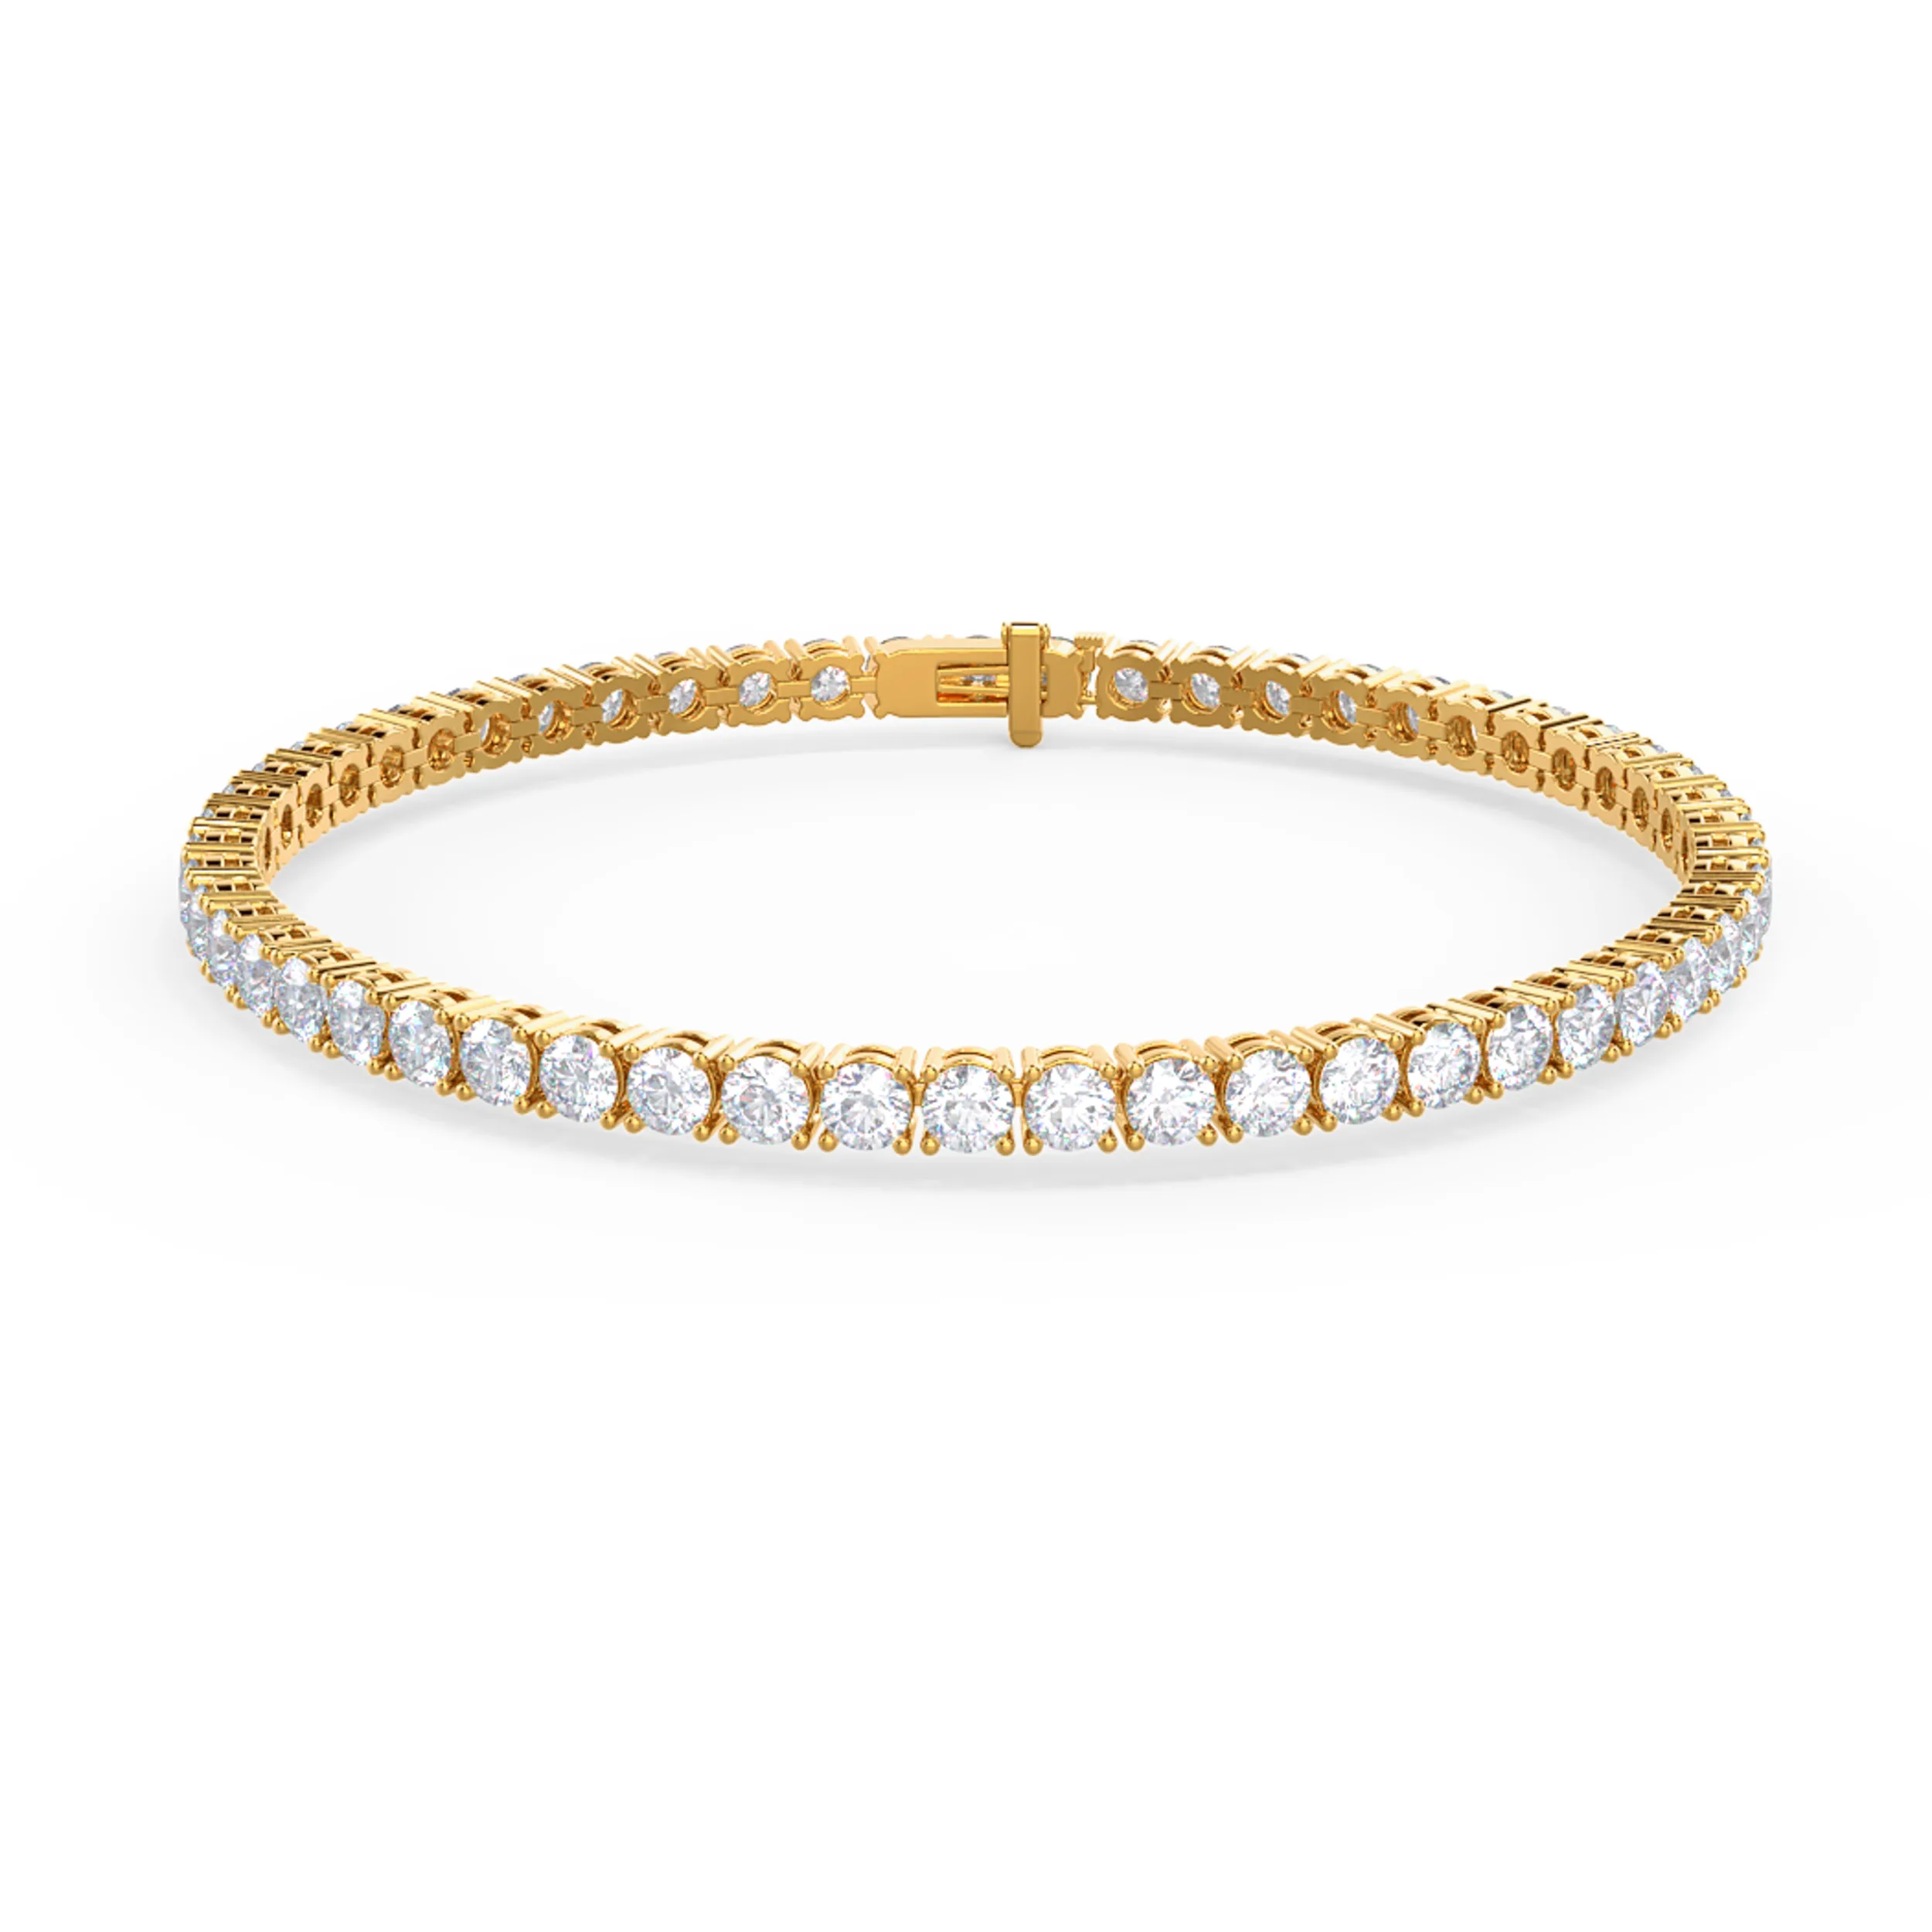 Yellow Gold Four Prong Tennis Bracelet featuring 6.0 Carat Round Lab Diamonds